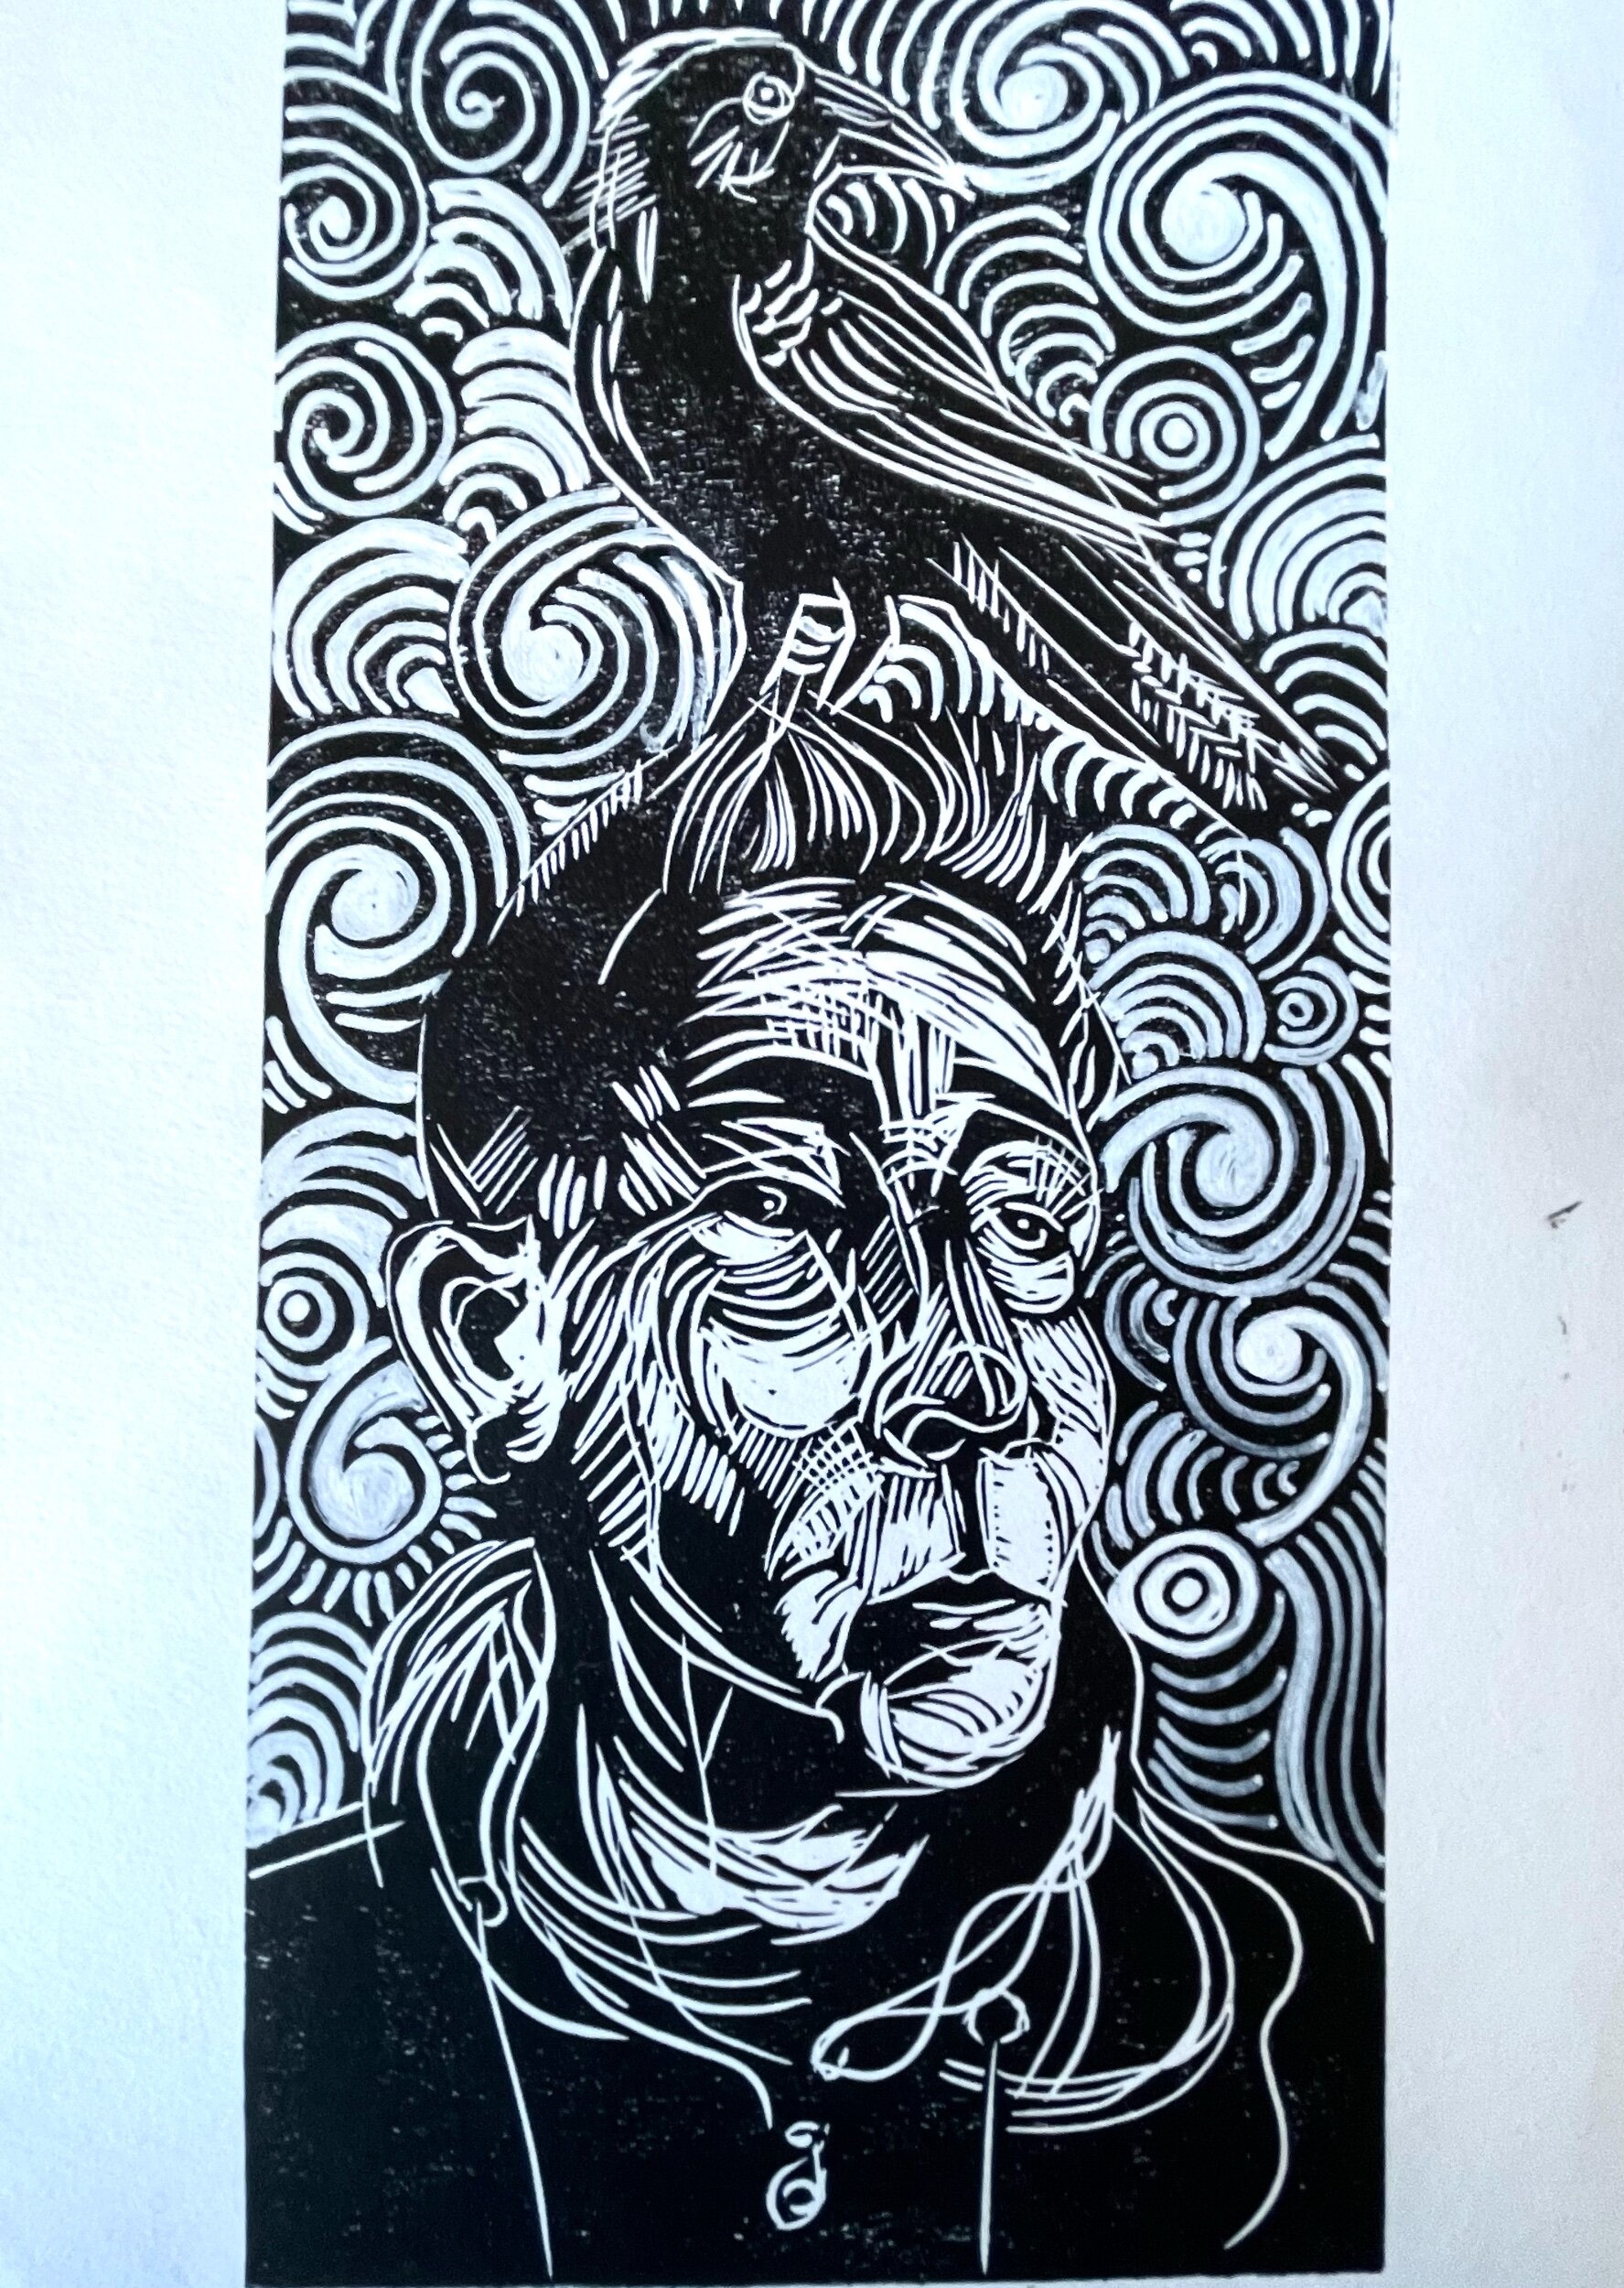 Self portrait with crow - original linocut print